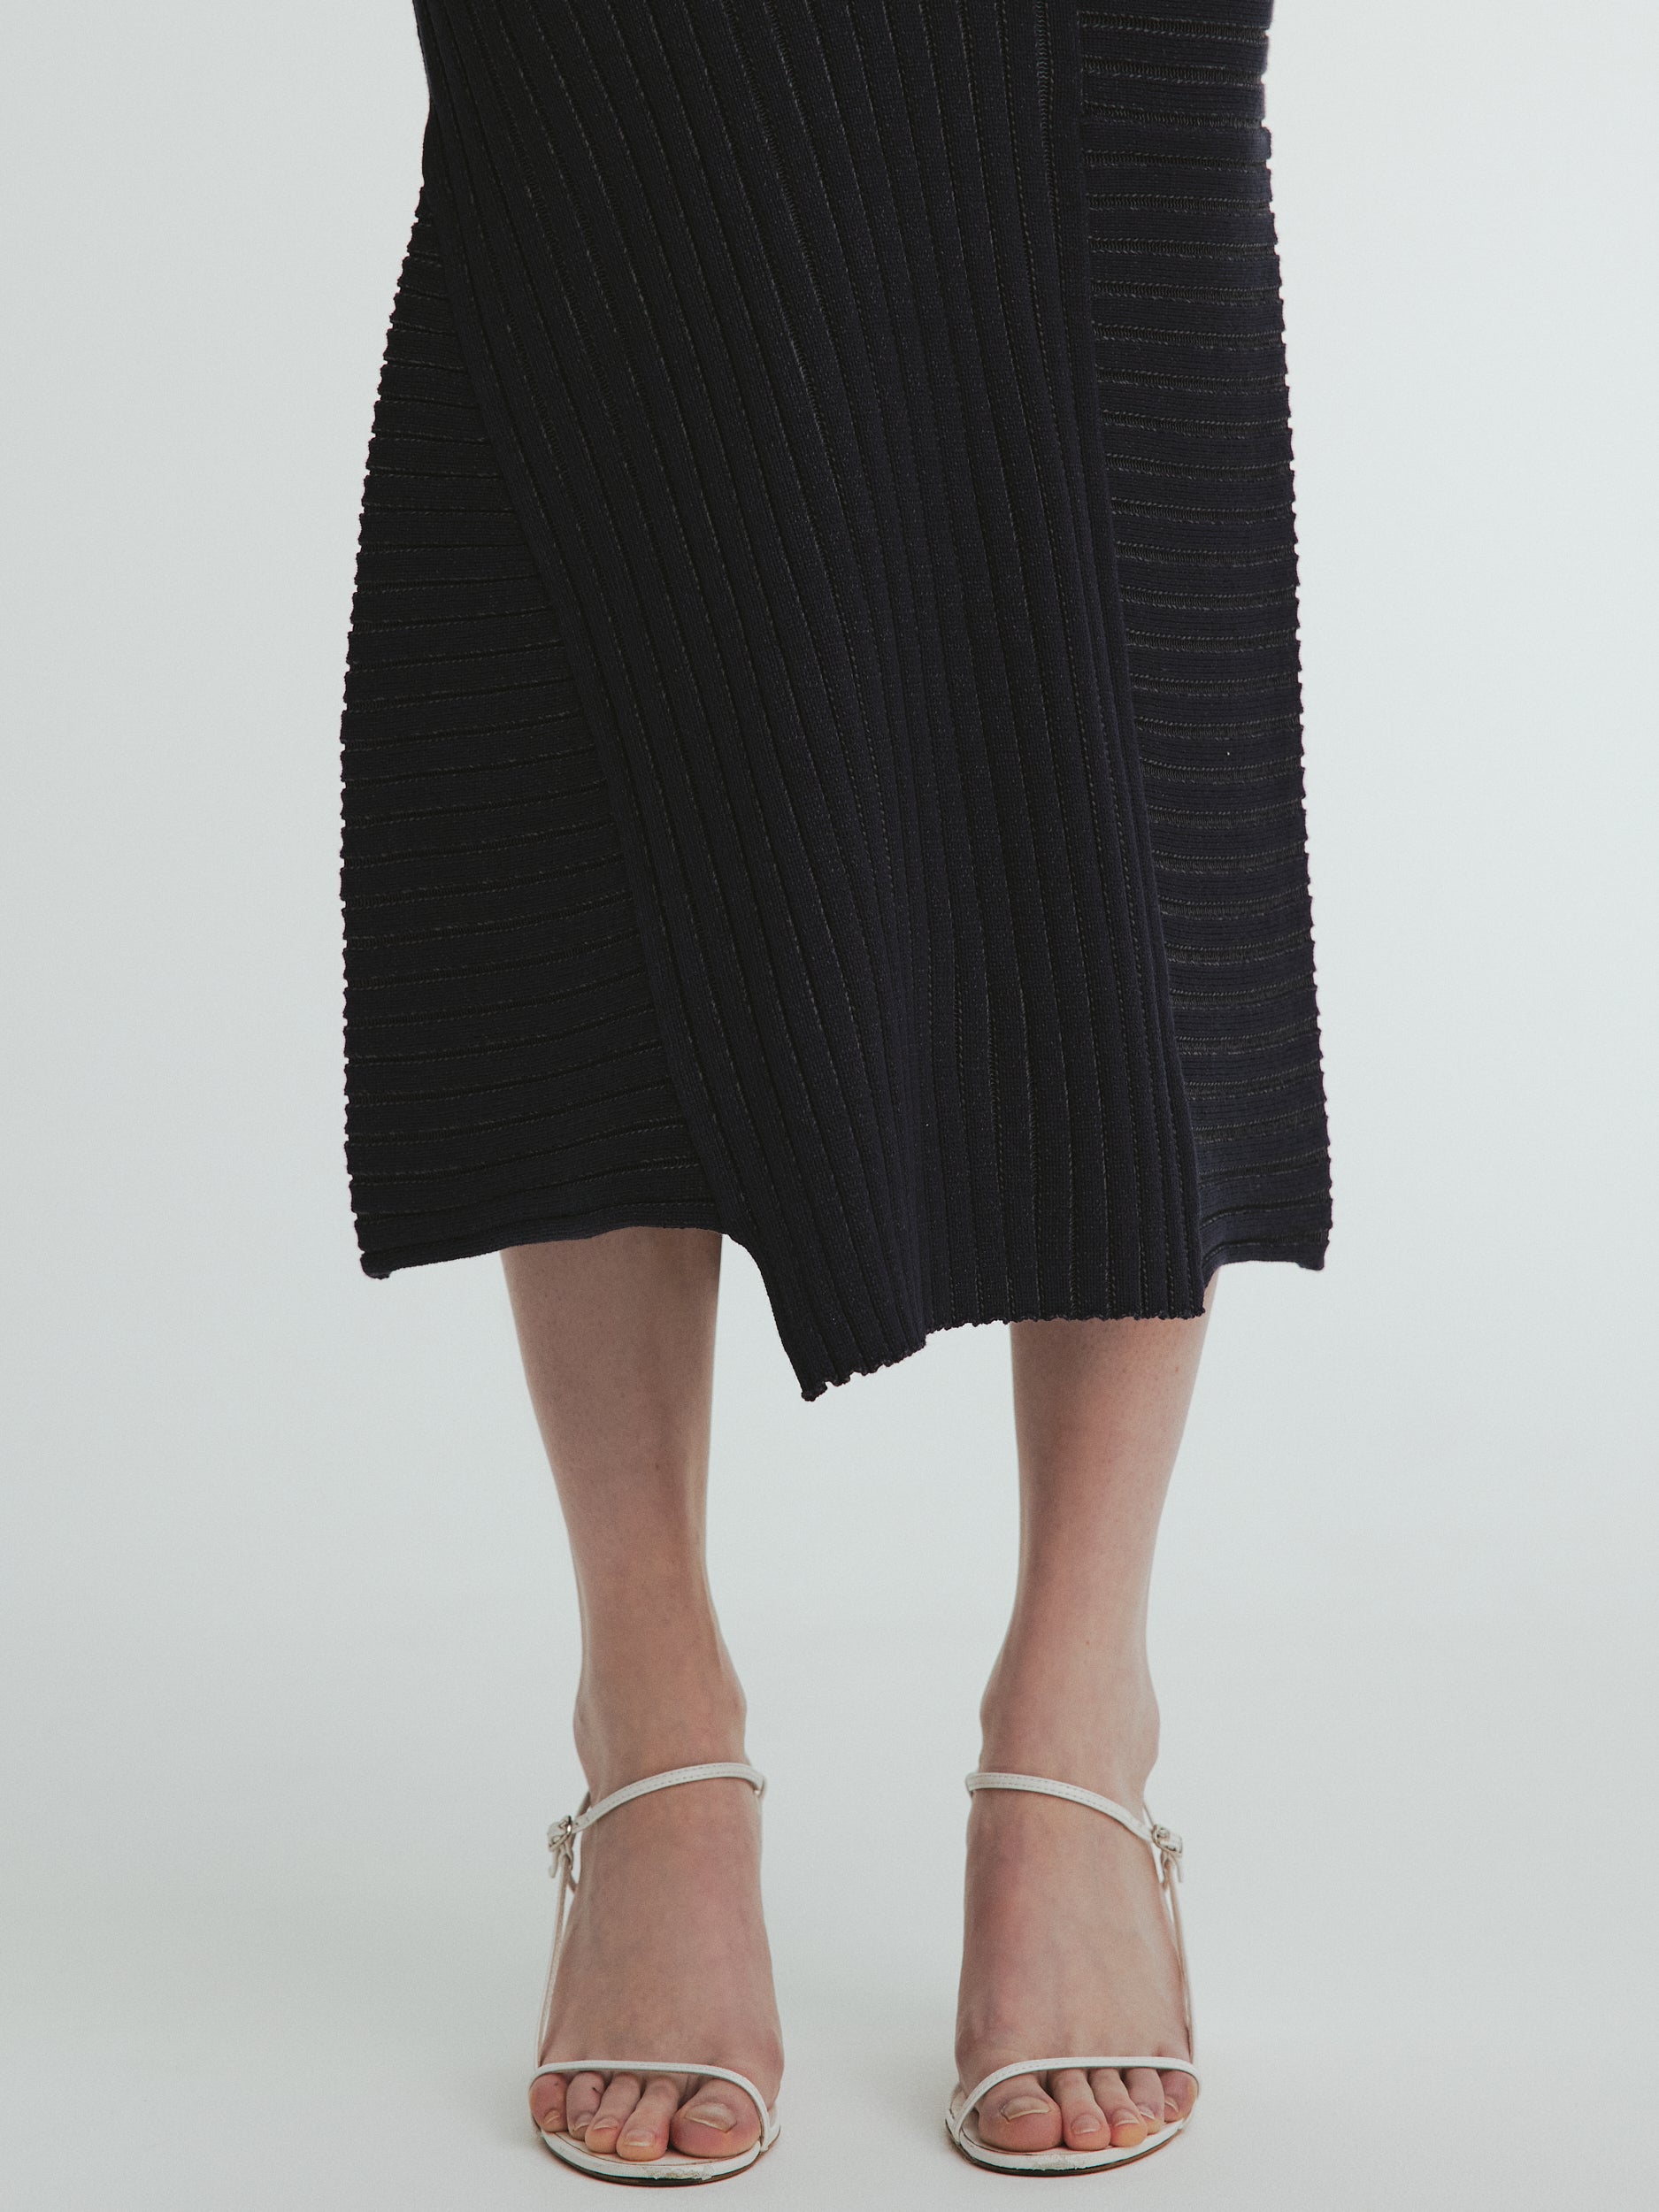 Panel rib knit Skirt